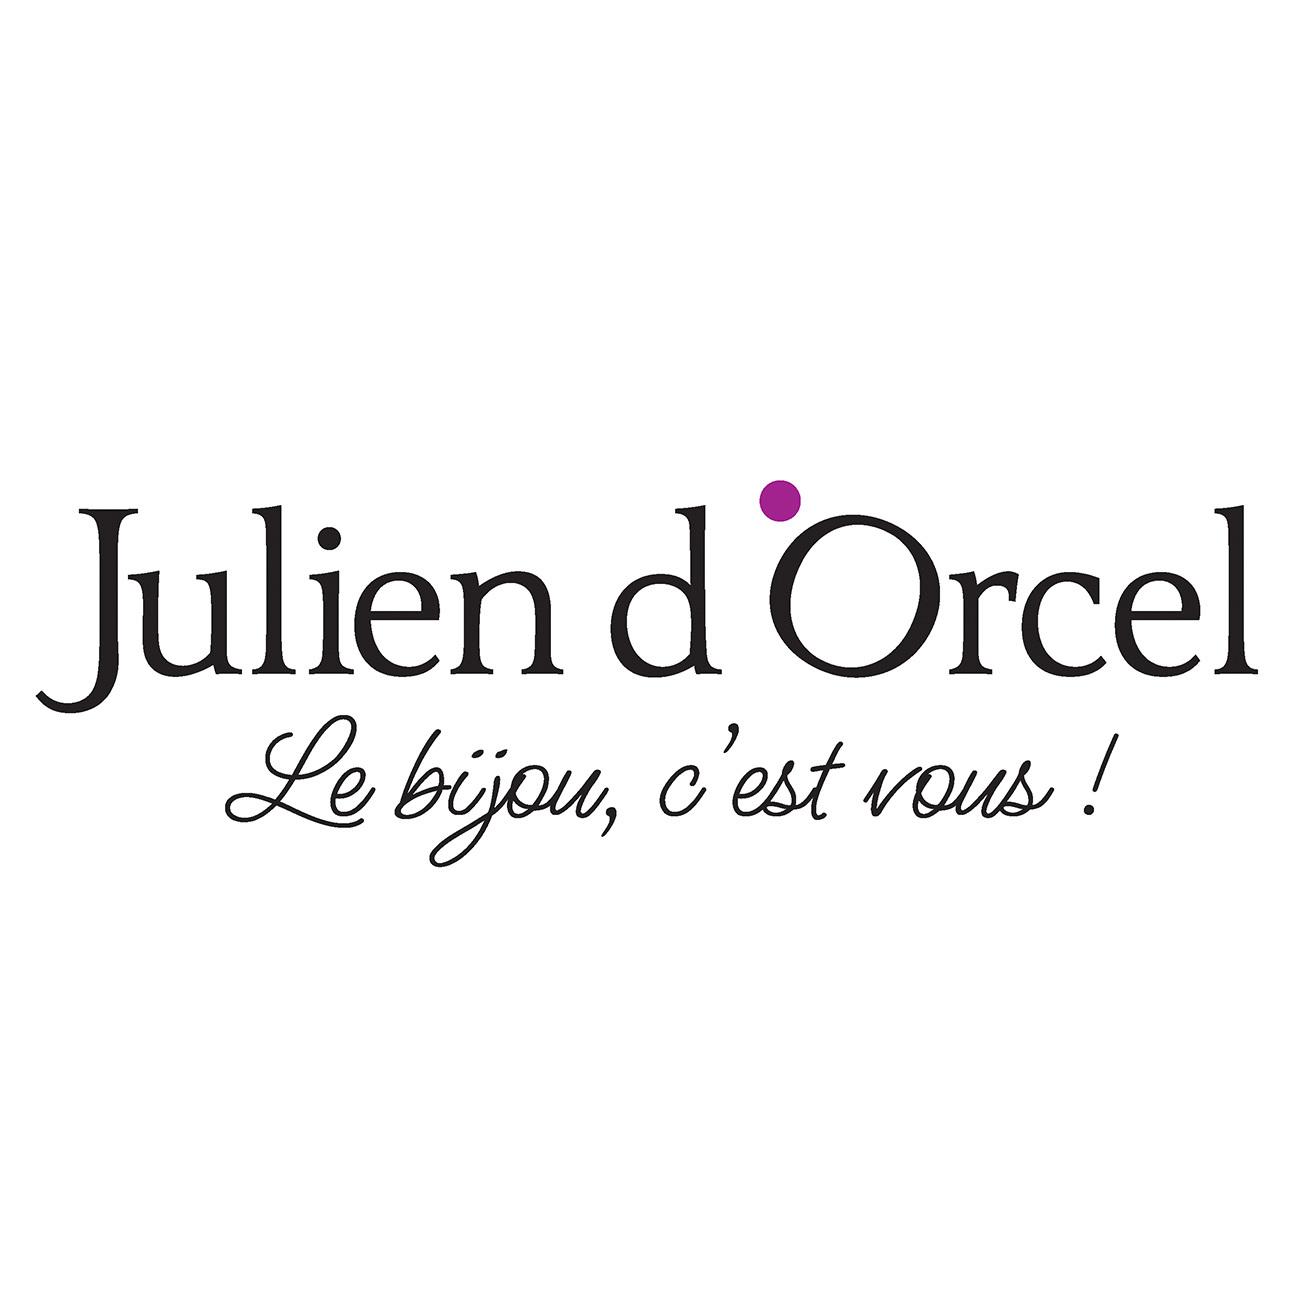 Julien D'orcel Varennes Sur Seine